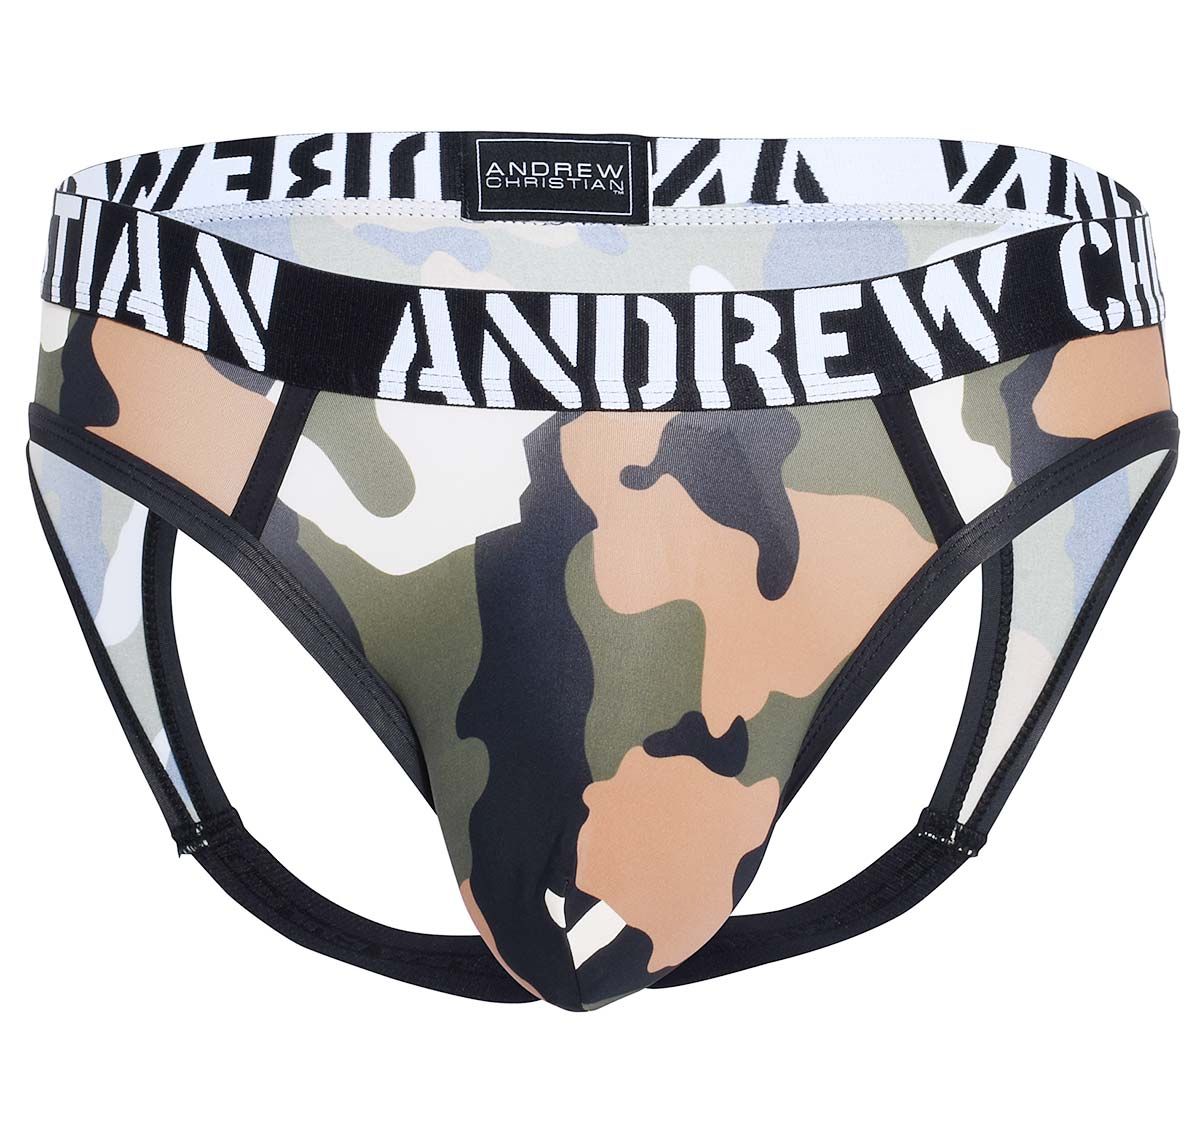 Andrew Christian Sospensorio CAMOUFLAGE LOCKER ROOM JOCK w/ Almost Naked 91854, army